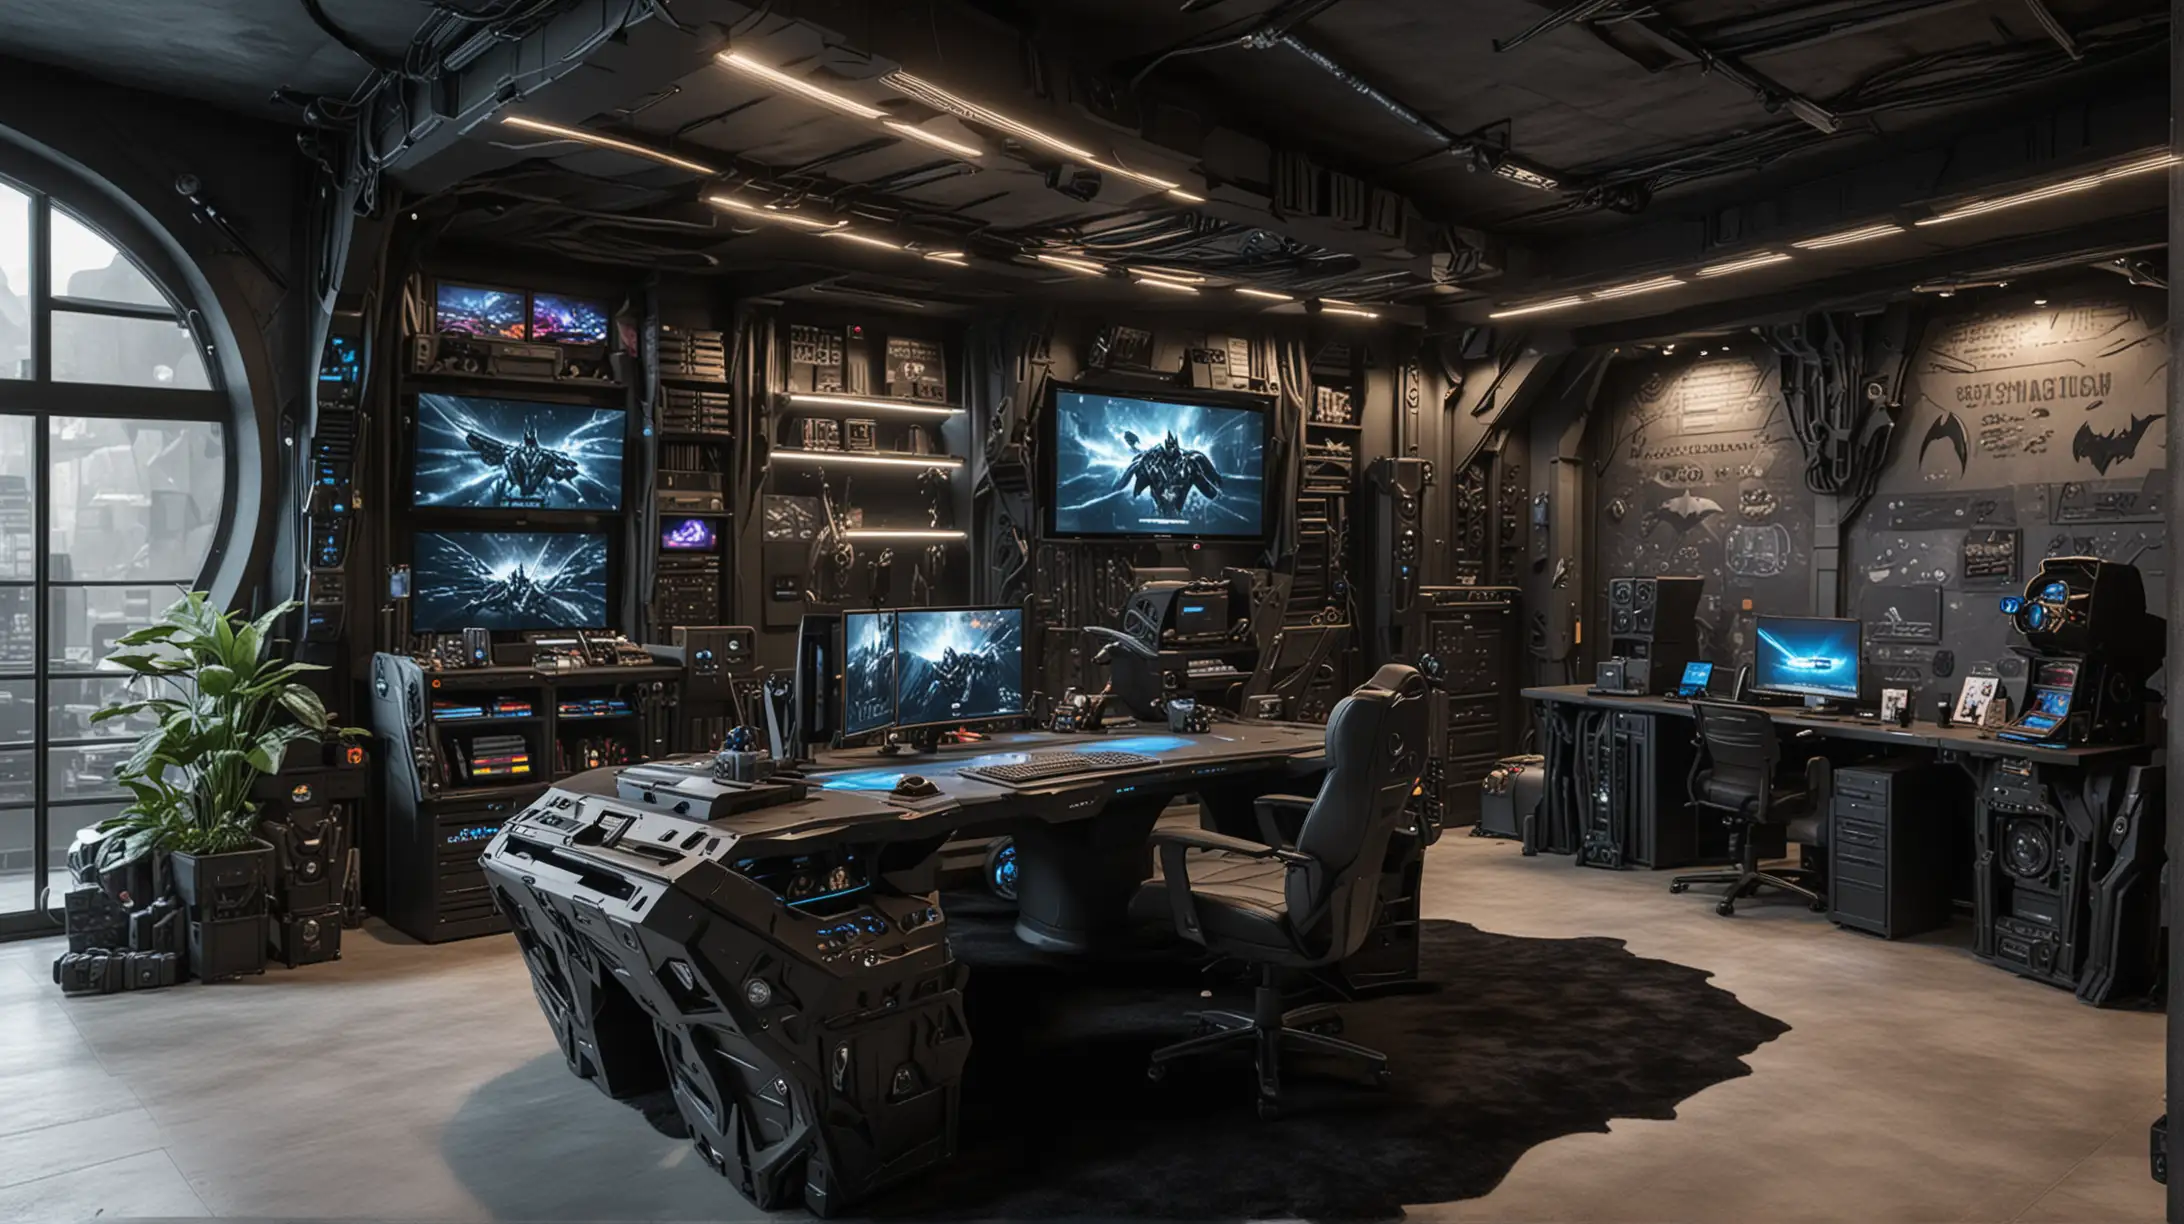 Elaborate super-computer desk setup and playroom design mimicking the aesthetics of the Batcave